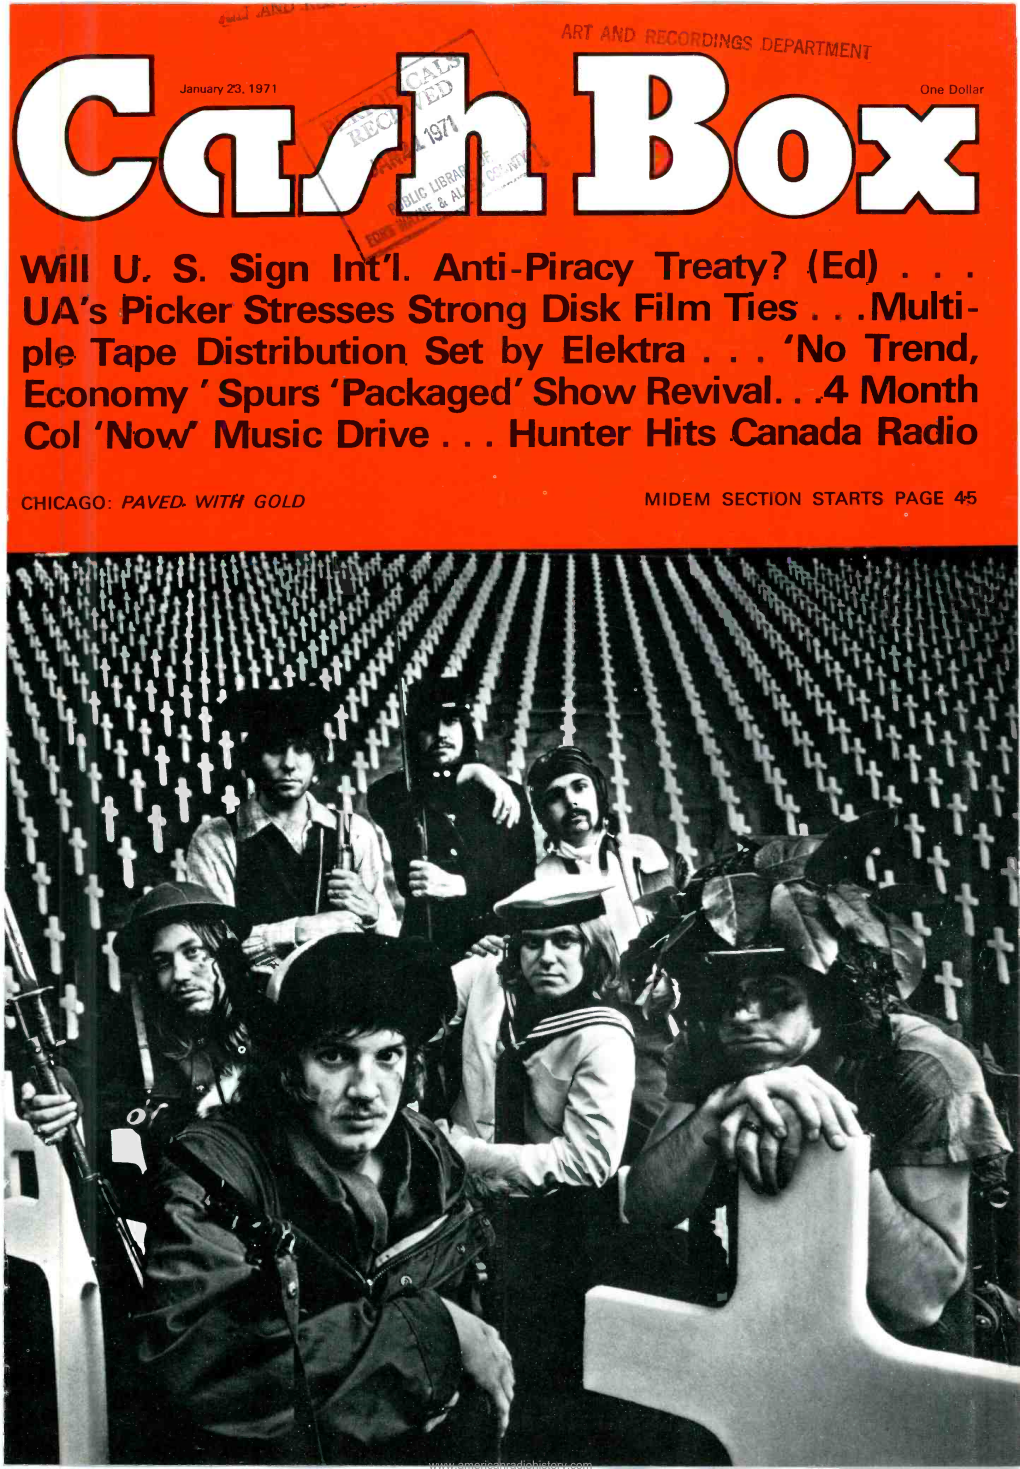 Now" Music Drive ...Hunter Hits Canada Radio